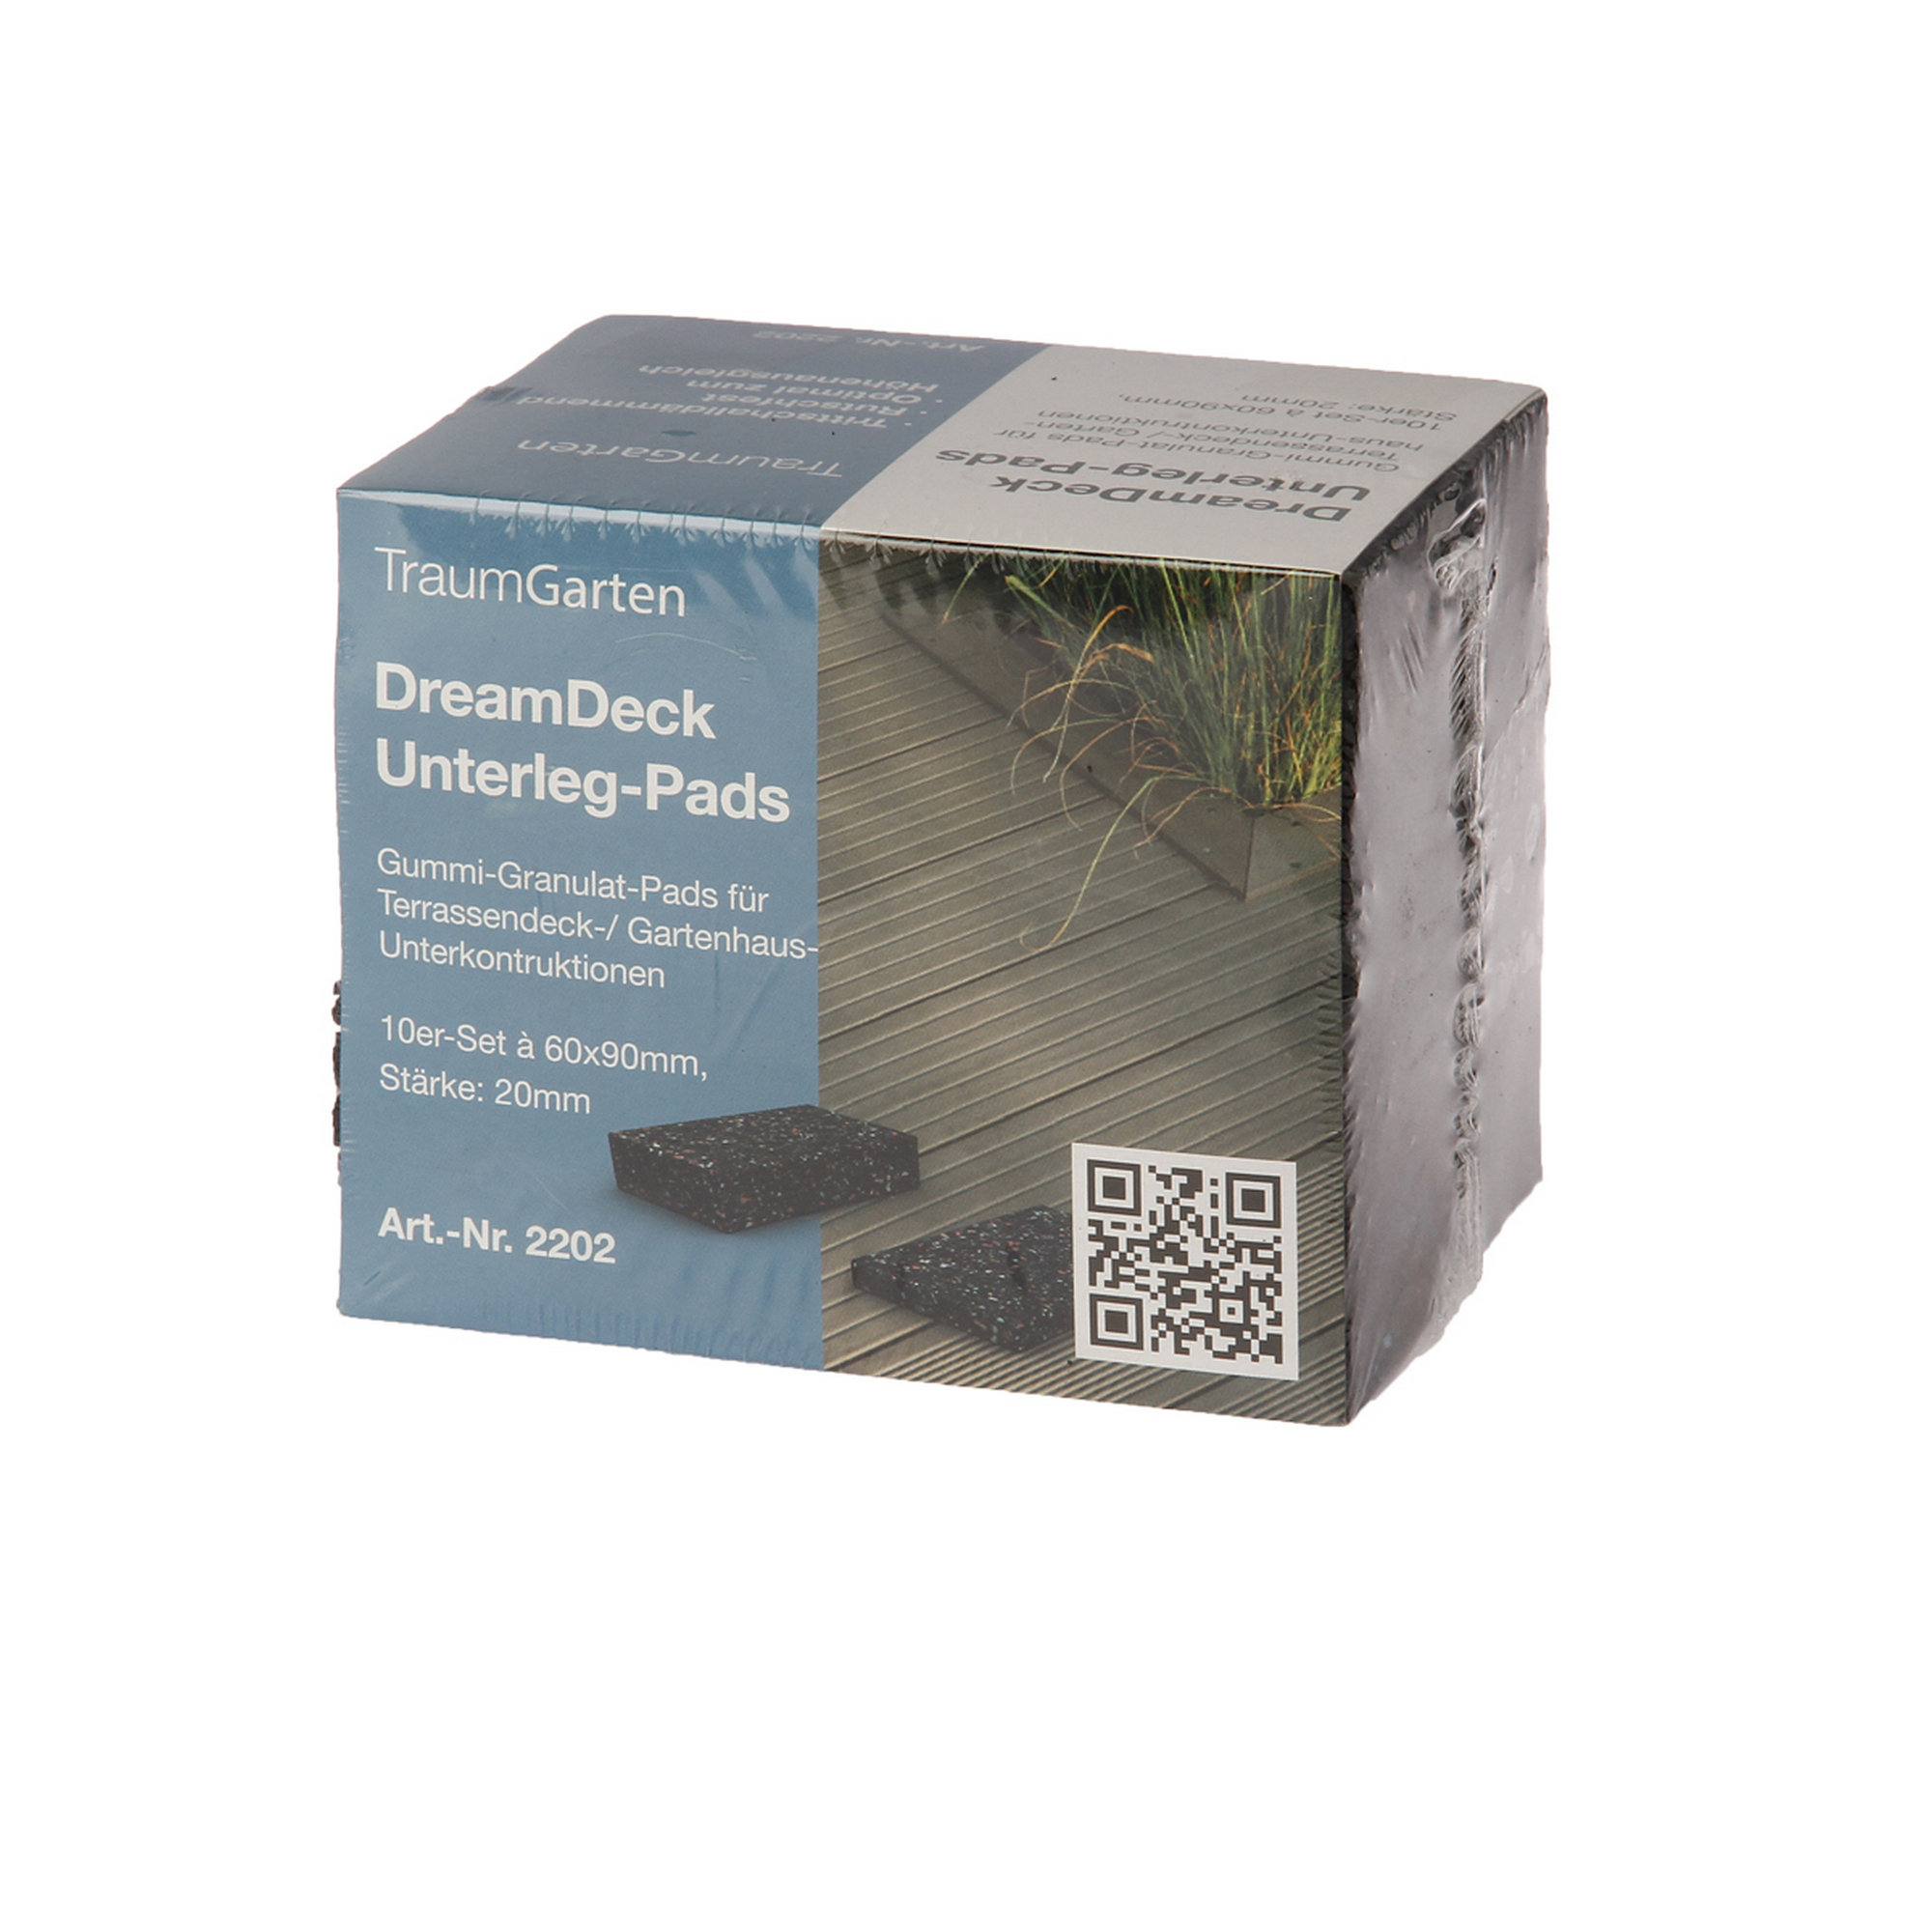 Unterleg-Pads 'Dreamdeck' 60 x 90 mm 10er-Set + product picture